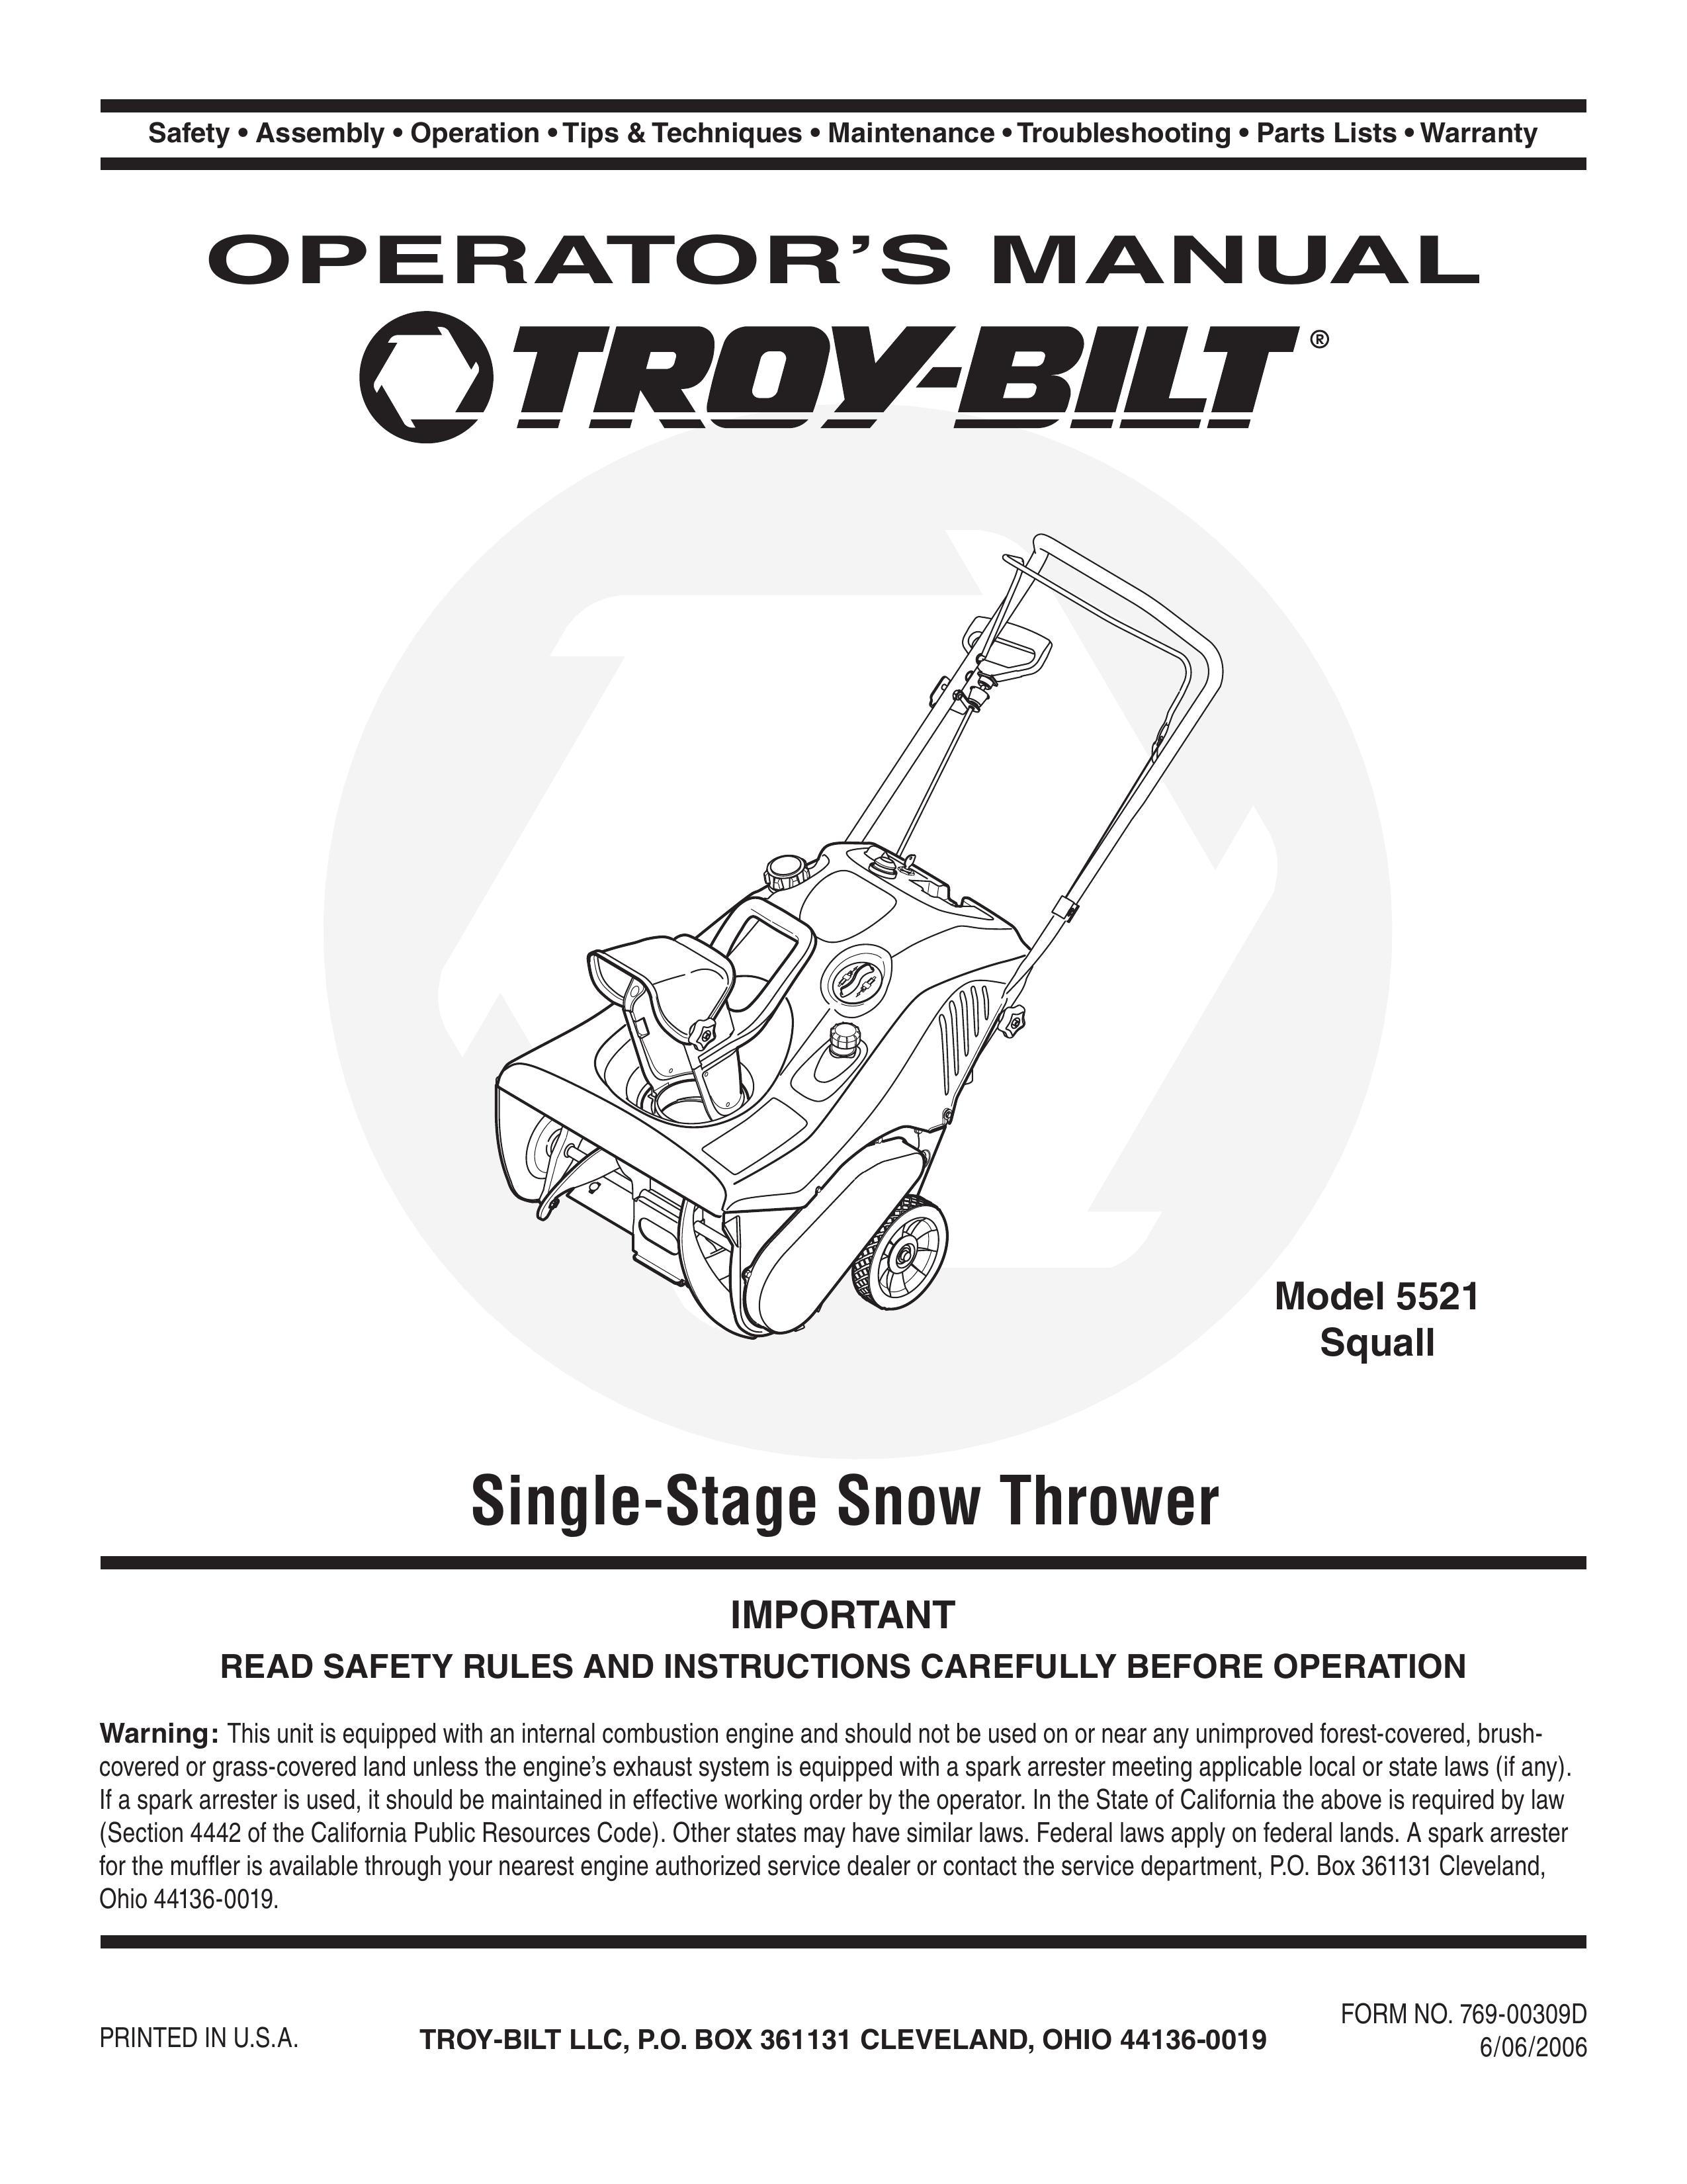 Troy-Bilt 5521 Snow Blower User Manual